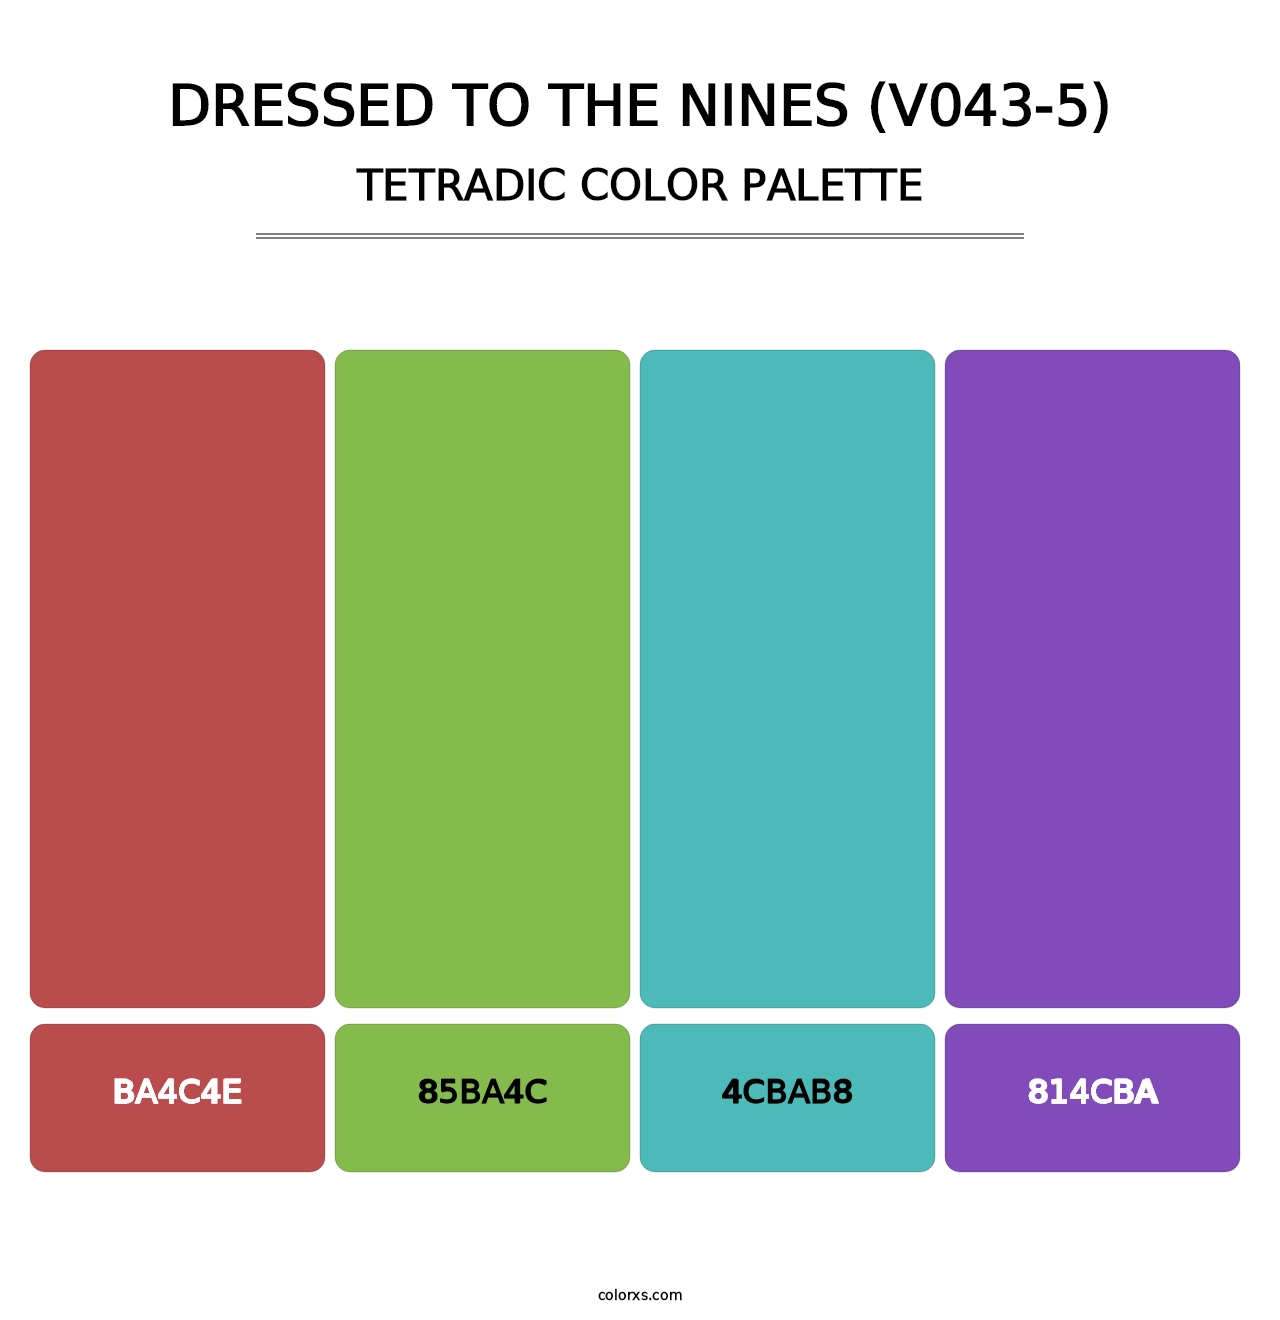 Dressed to the Nines (V043-5) - Tetradic Color Palette